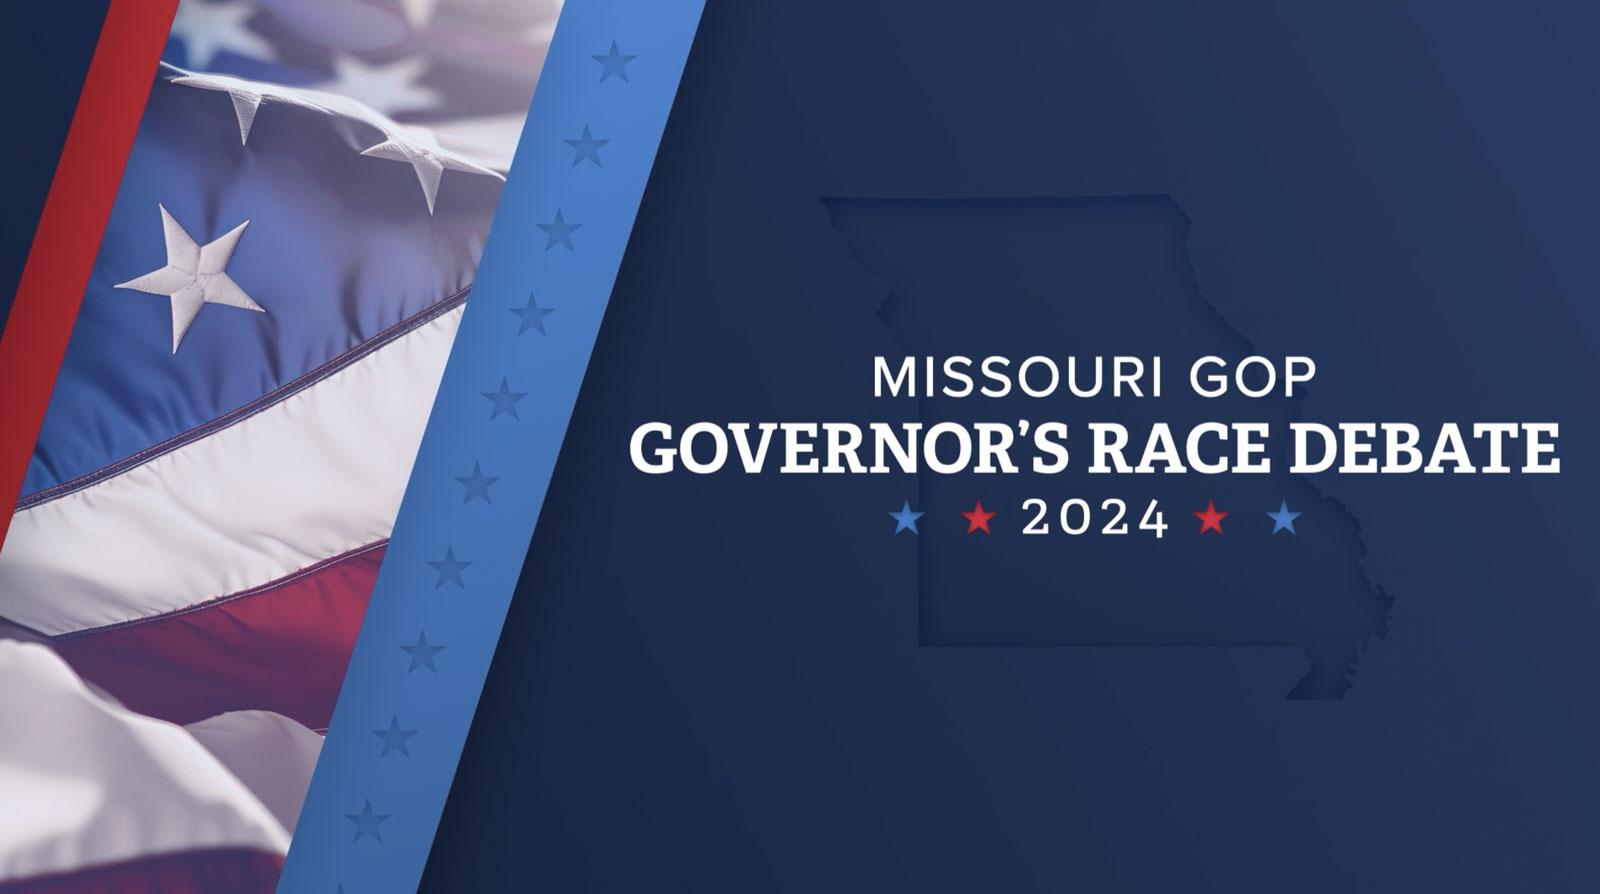 American Flag detail, Missouri GOP Governor's Race Debate 2024